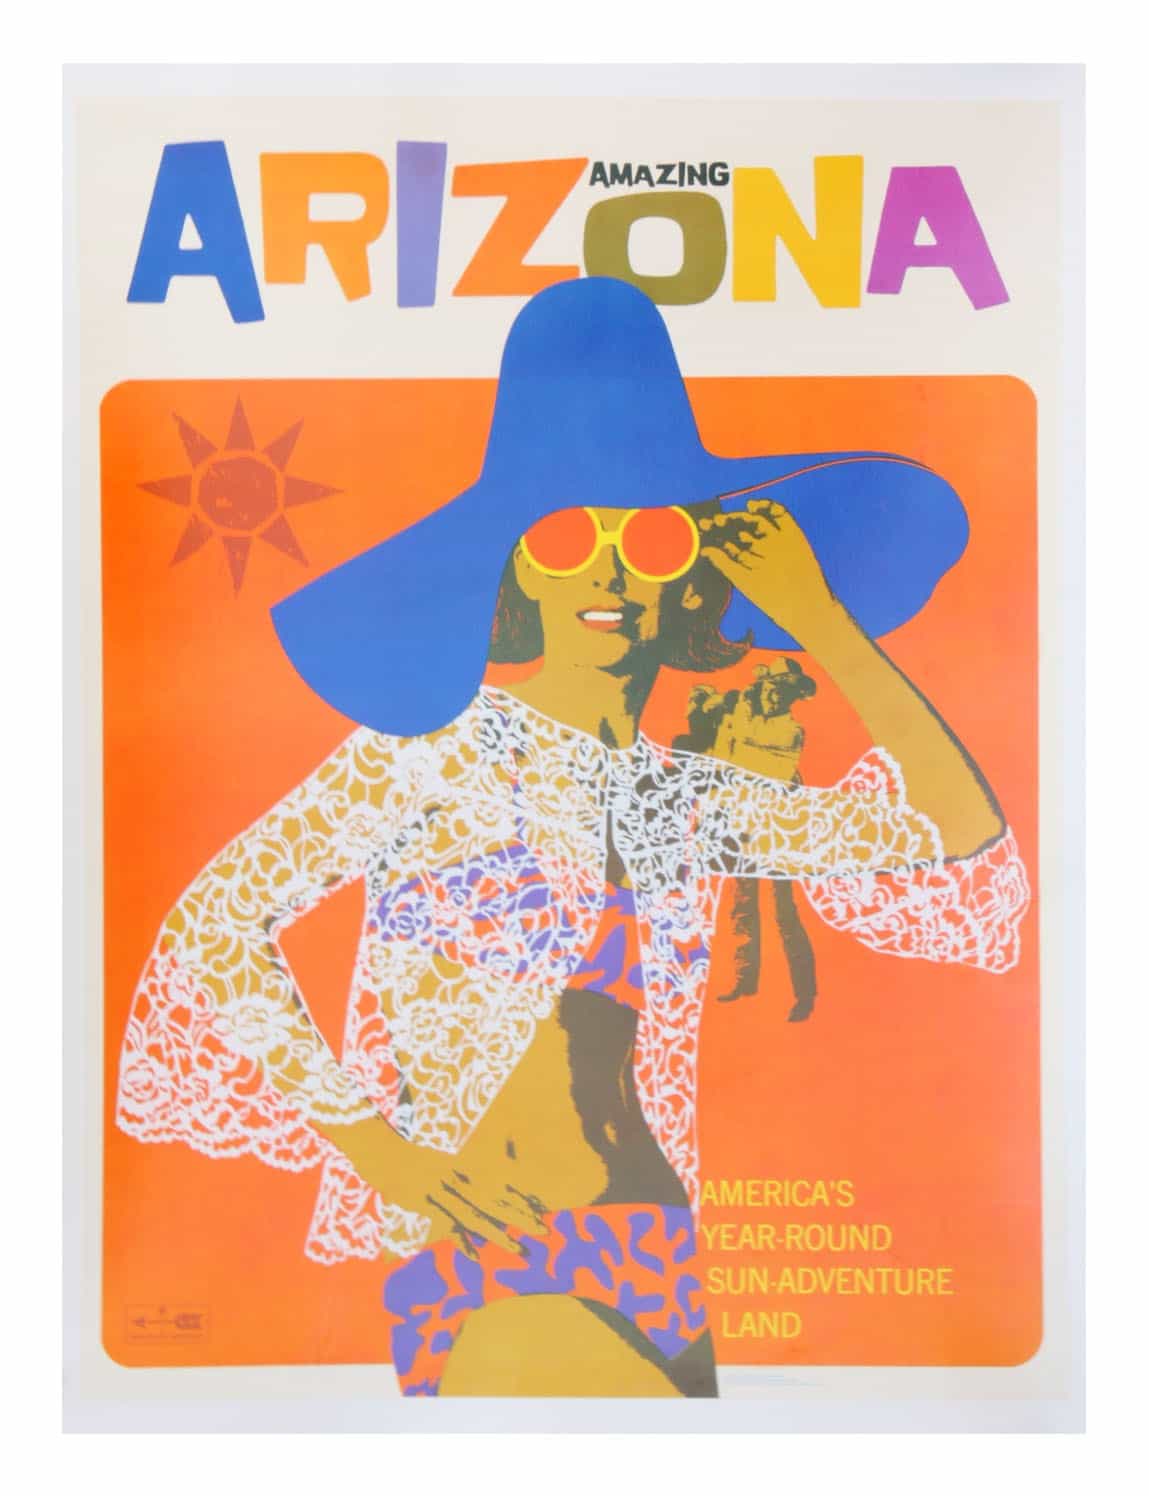 Amazing Arizona Americas Year Round Sun Adventure Land Poster Vintage Travel Poster